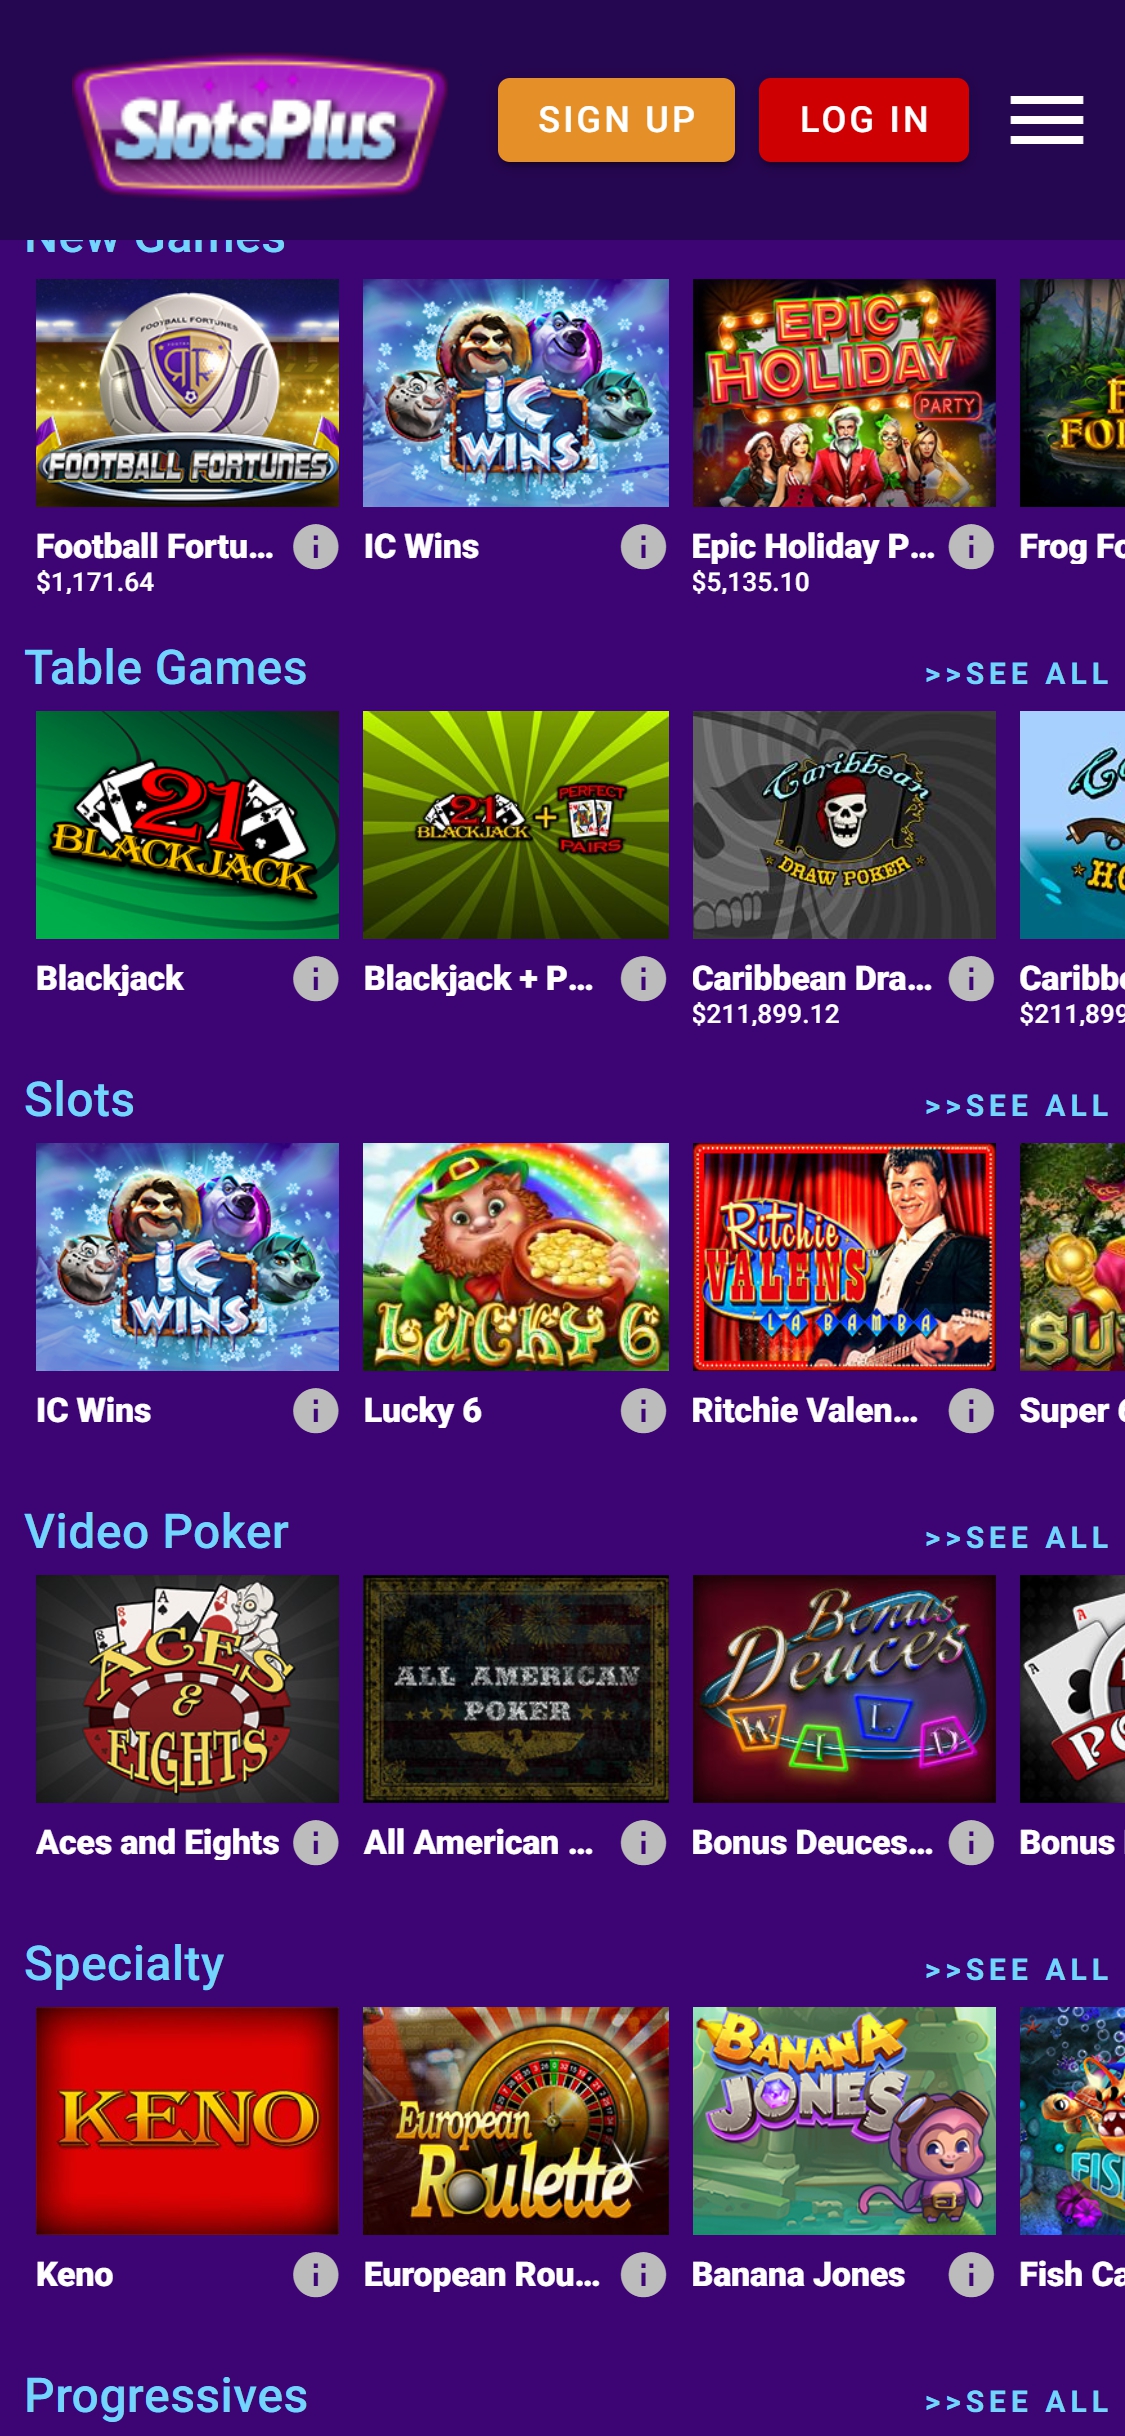 Slots Plus Casino Mobile Games Review